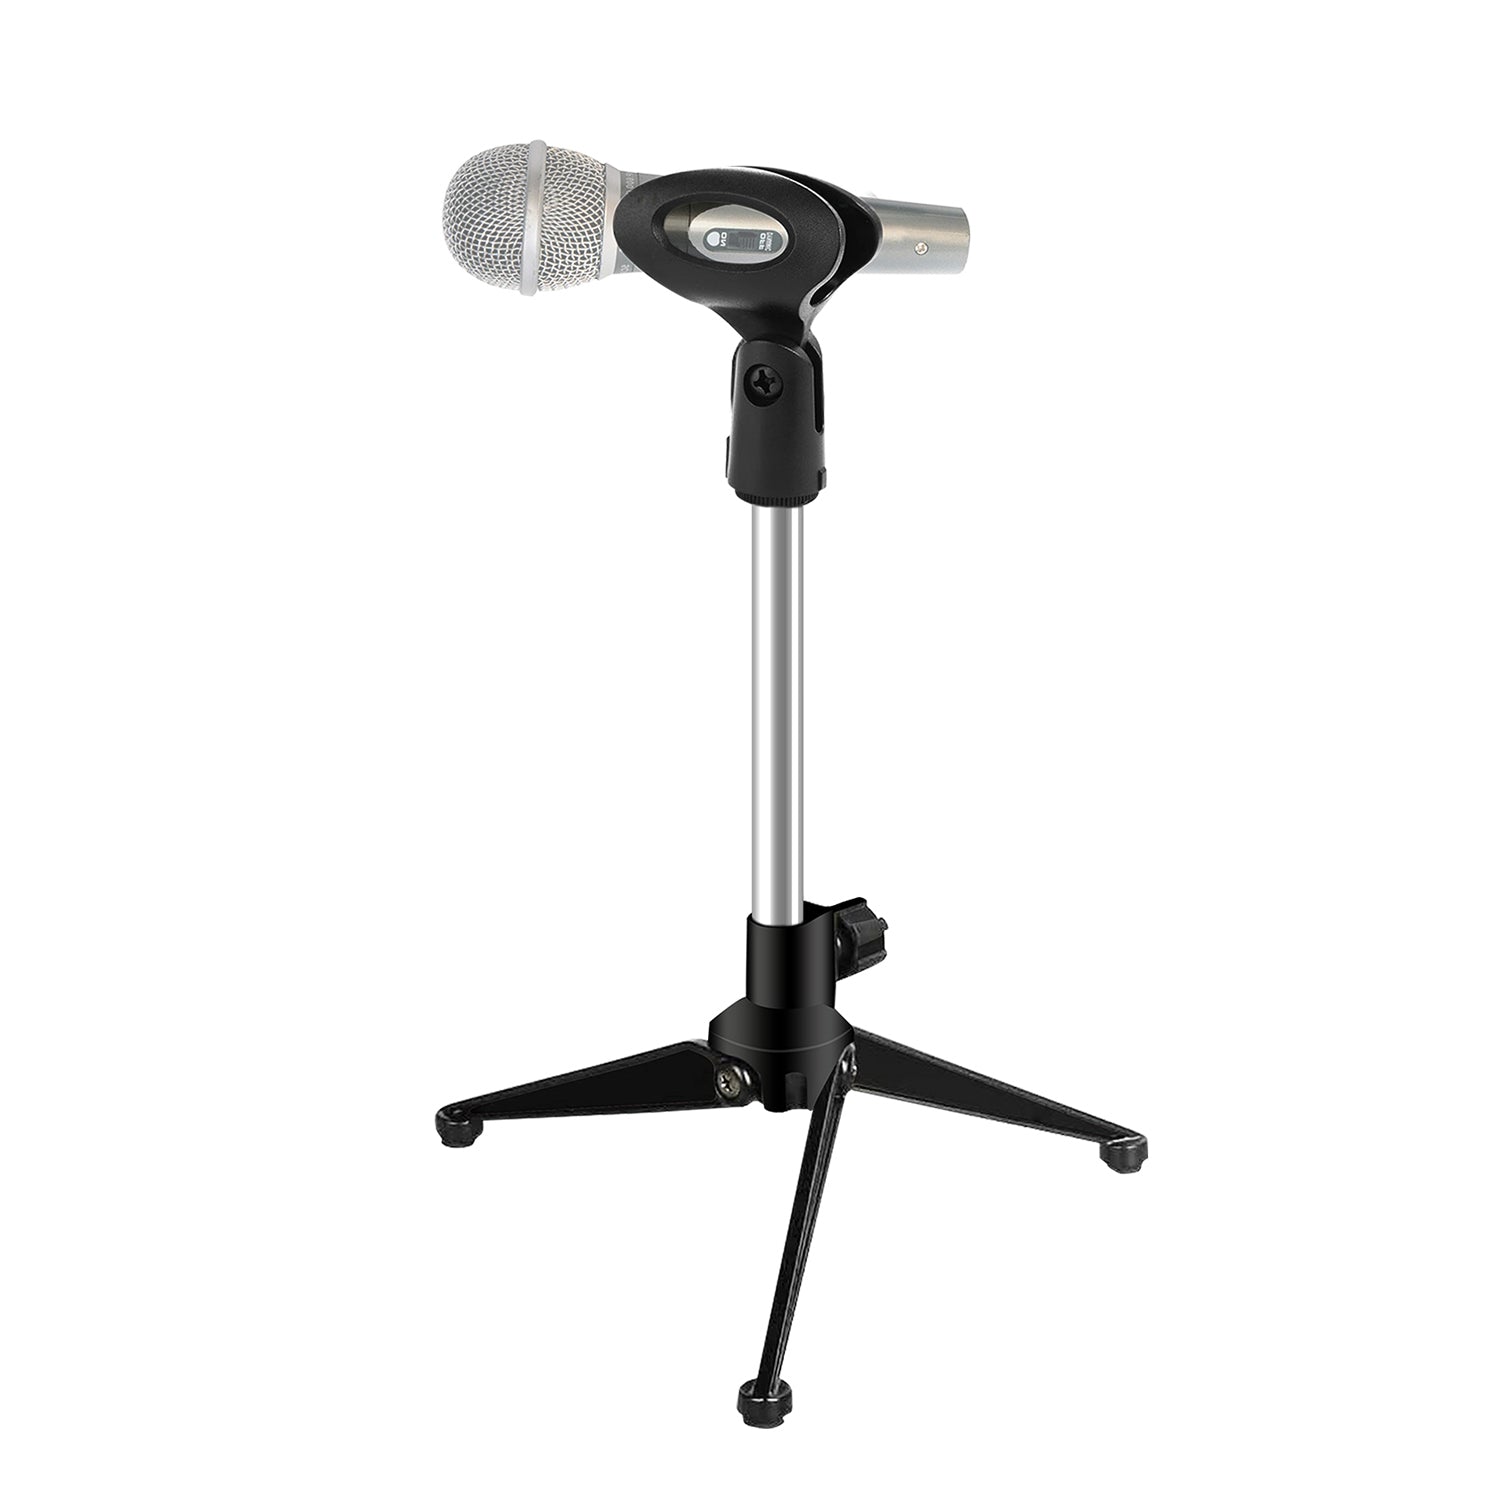 5 Core Desk Mic Stand Adjustable Table Tripod Portable Desktop Microphone Stands Holder